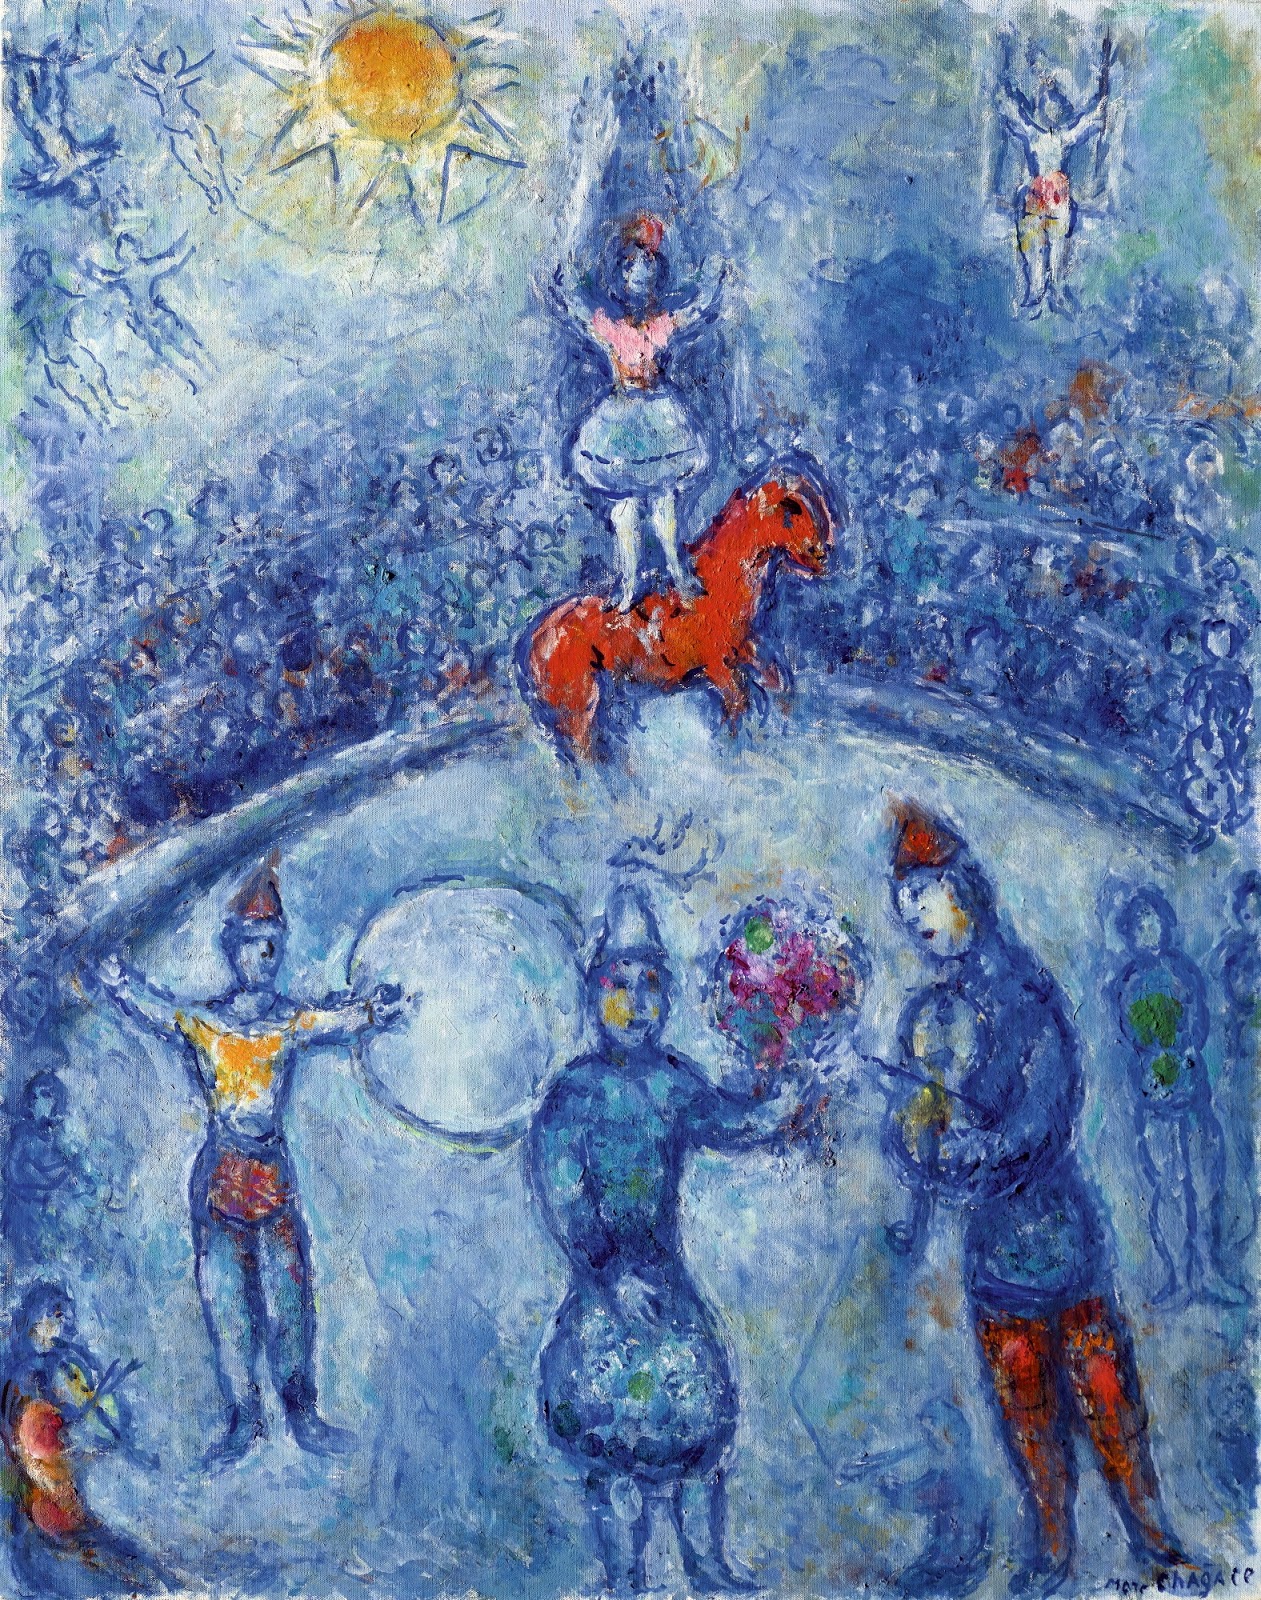 Marc+Chagall-1887-1985 (254).jpg